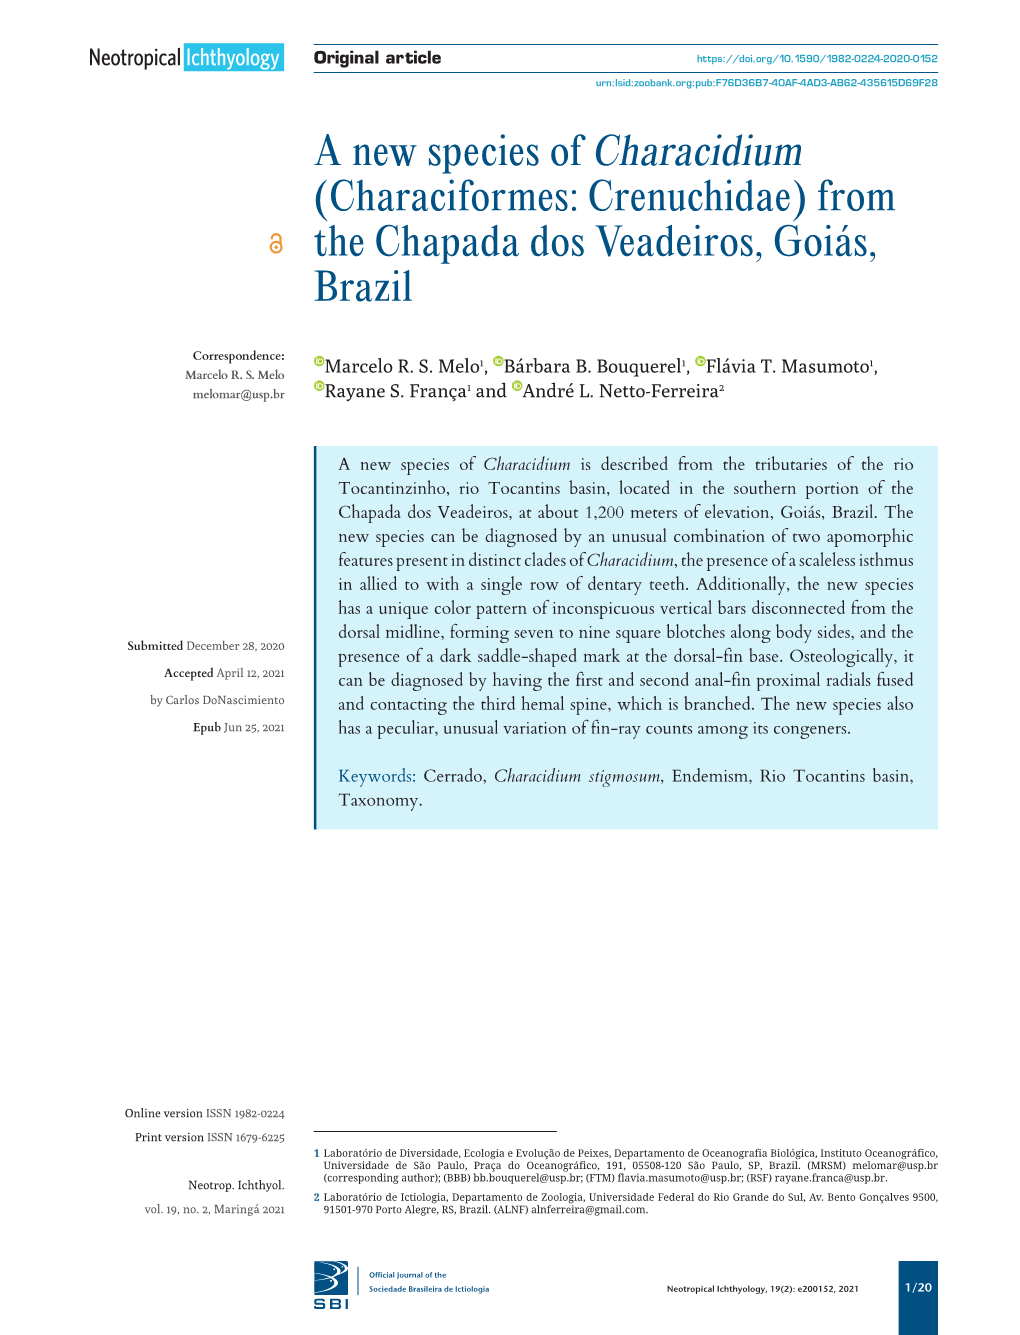 A New Species of Characidium (Characiformes: Crenuchidae) from the Chapada Dos Veadeiros, Goiás, Brazil